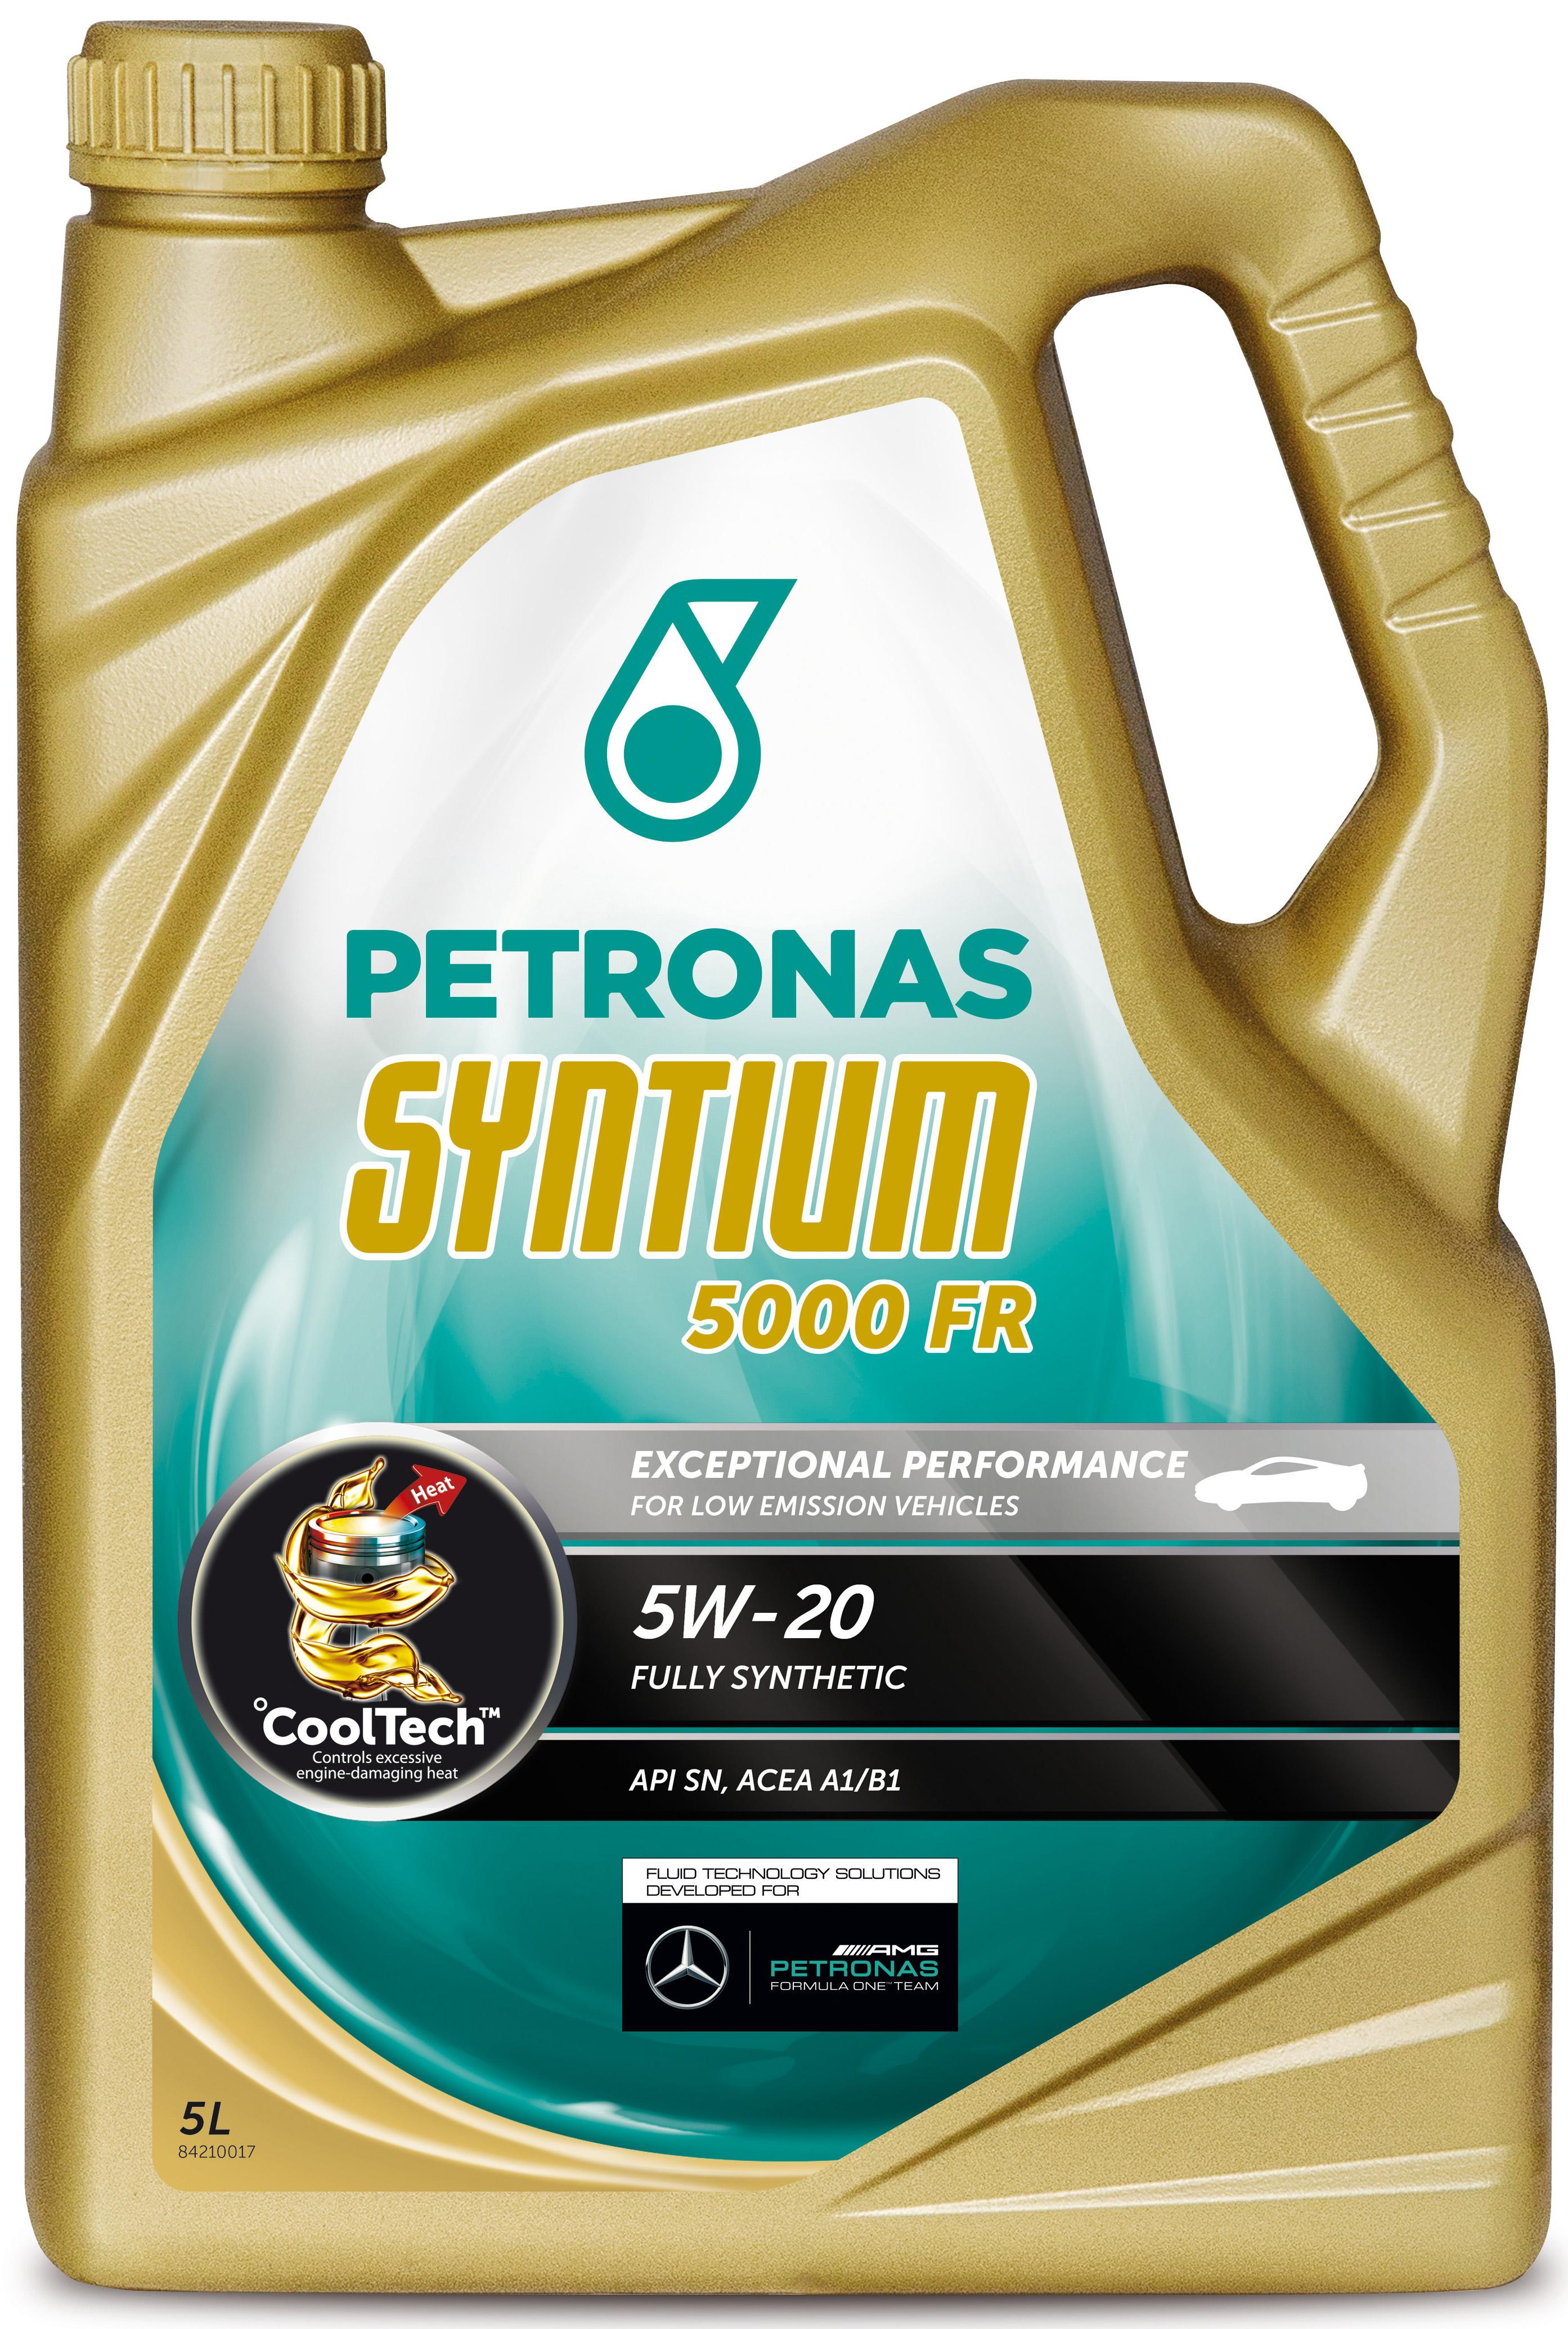 Petronas Syntium 5000 Ford 5W-20 Oil 5L